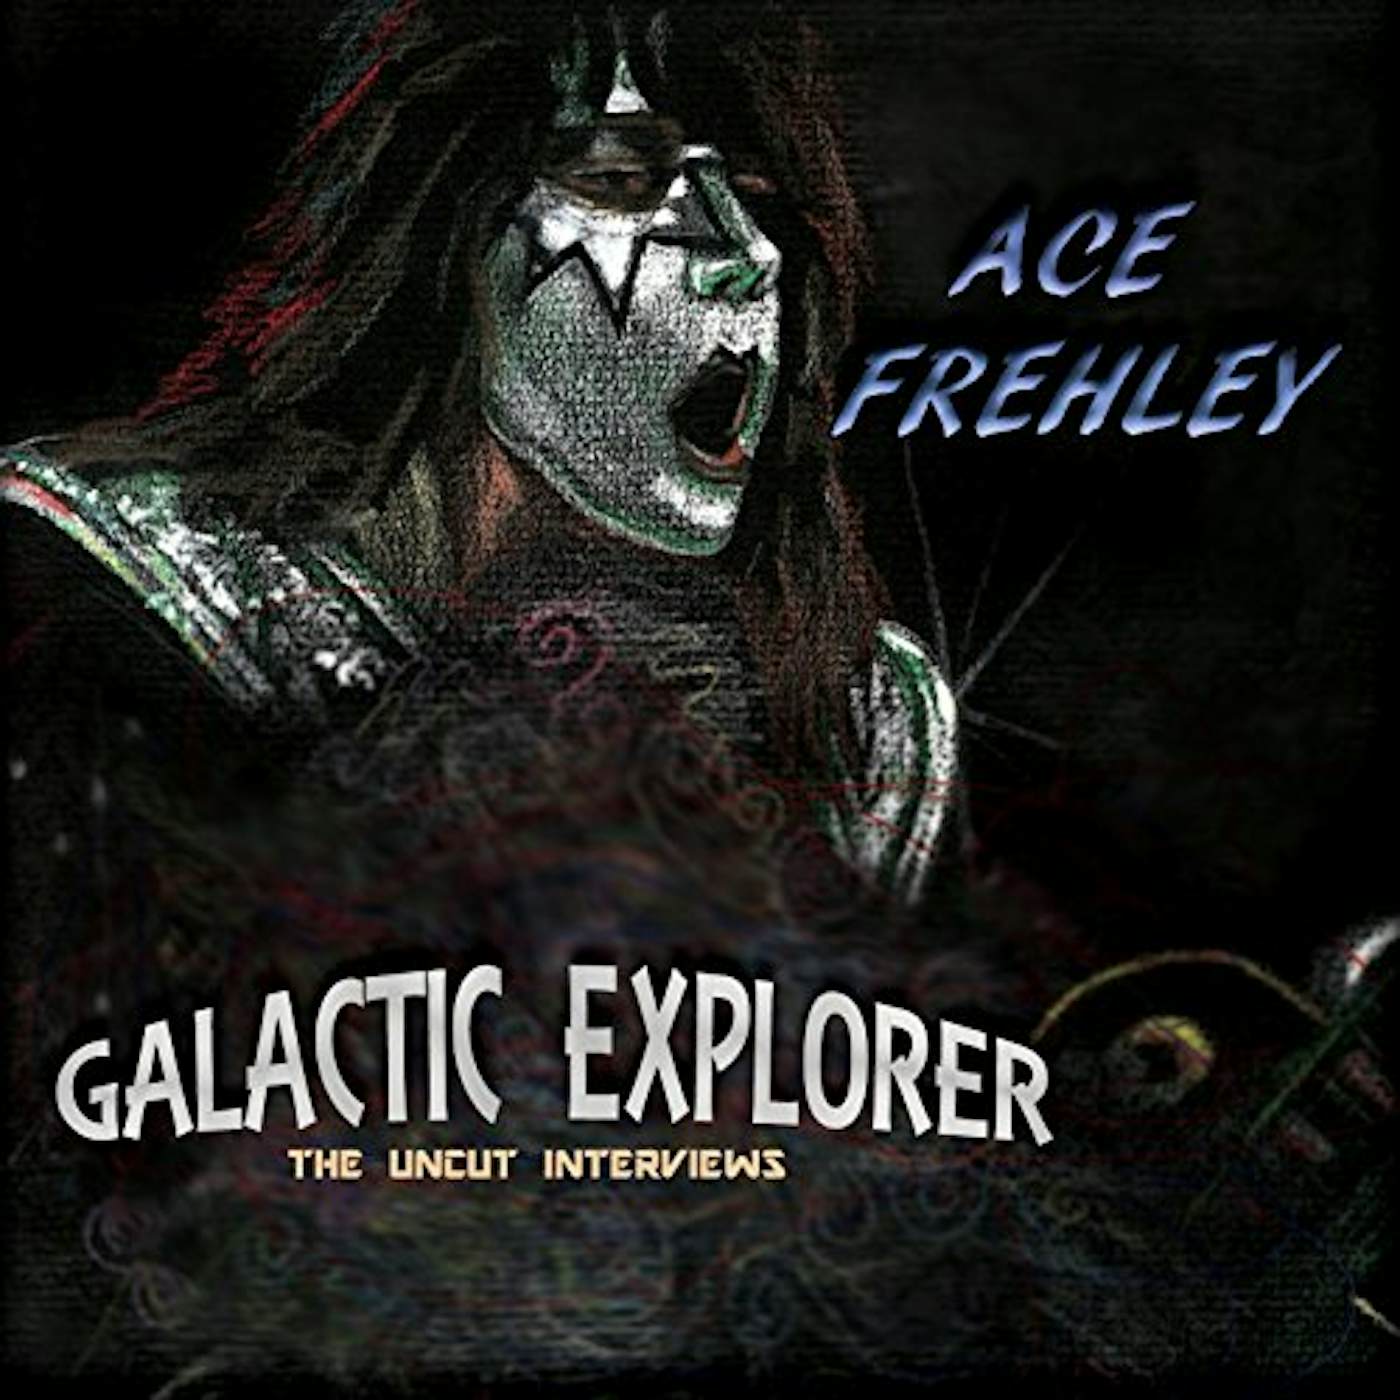 Ace Frehley GALACTIC EXPLORER: THE UNCUT INTERVIEWS CD